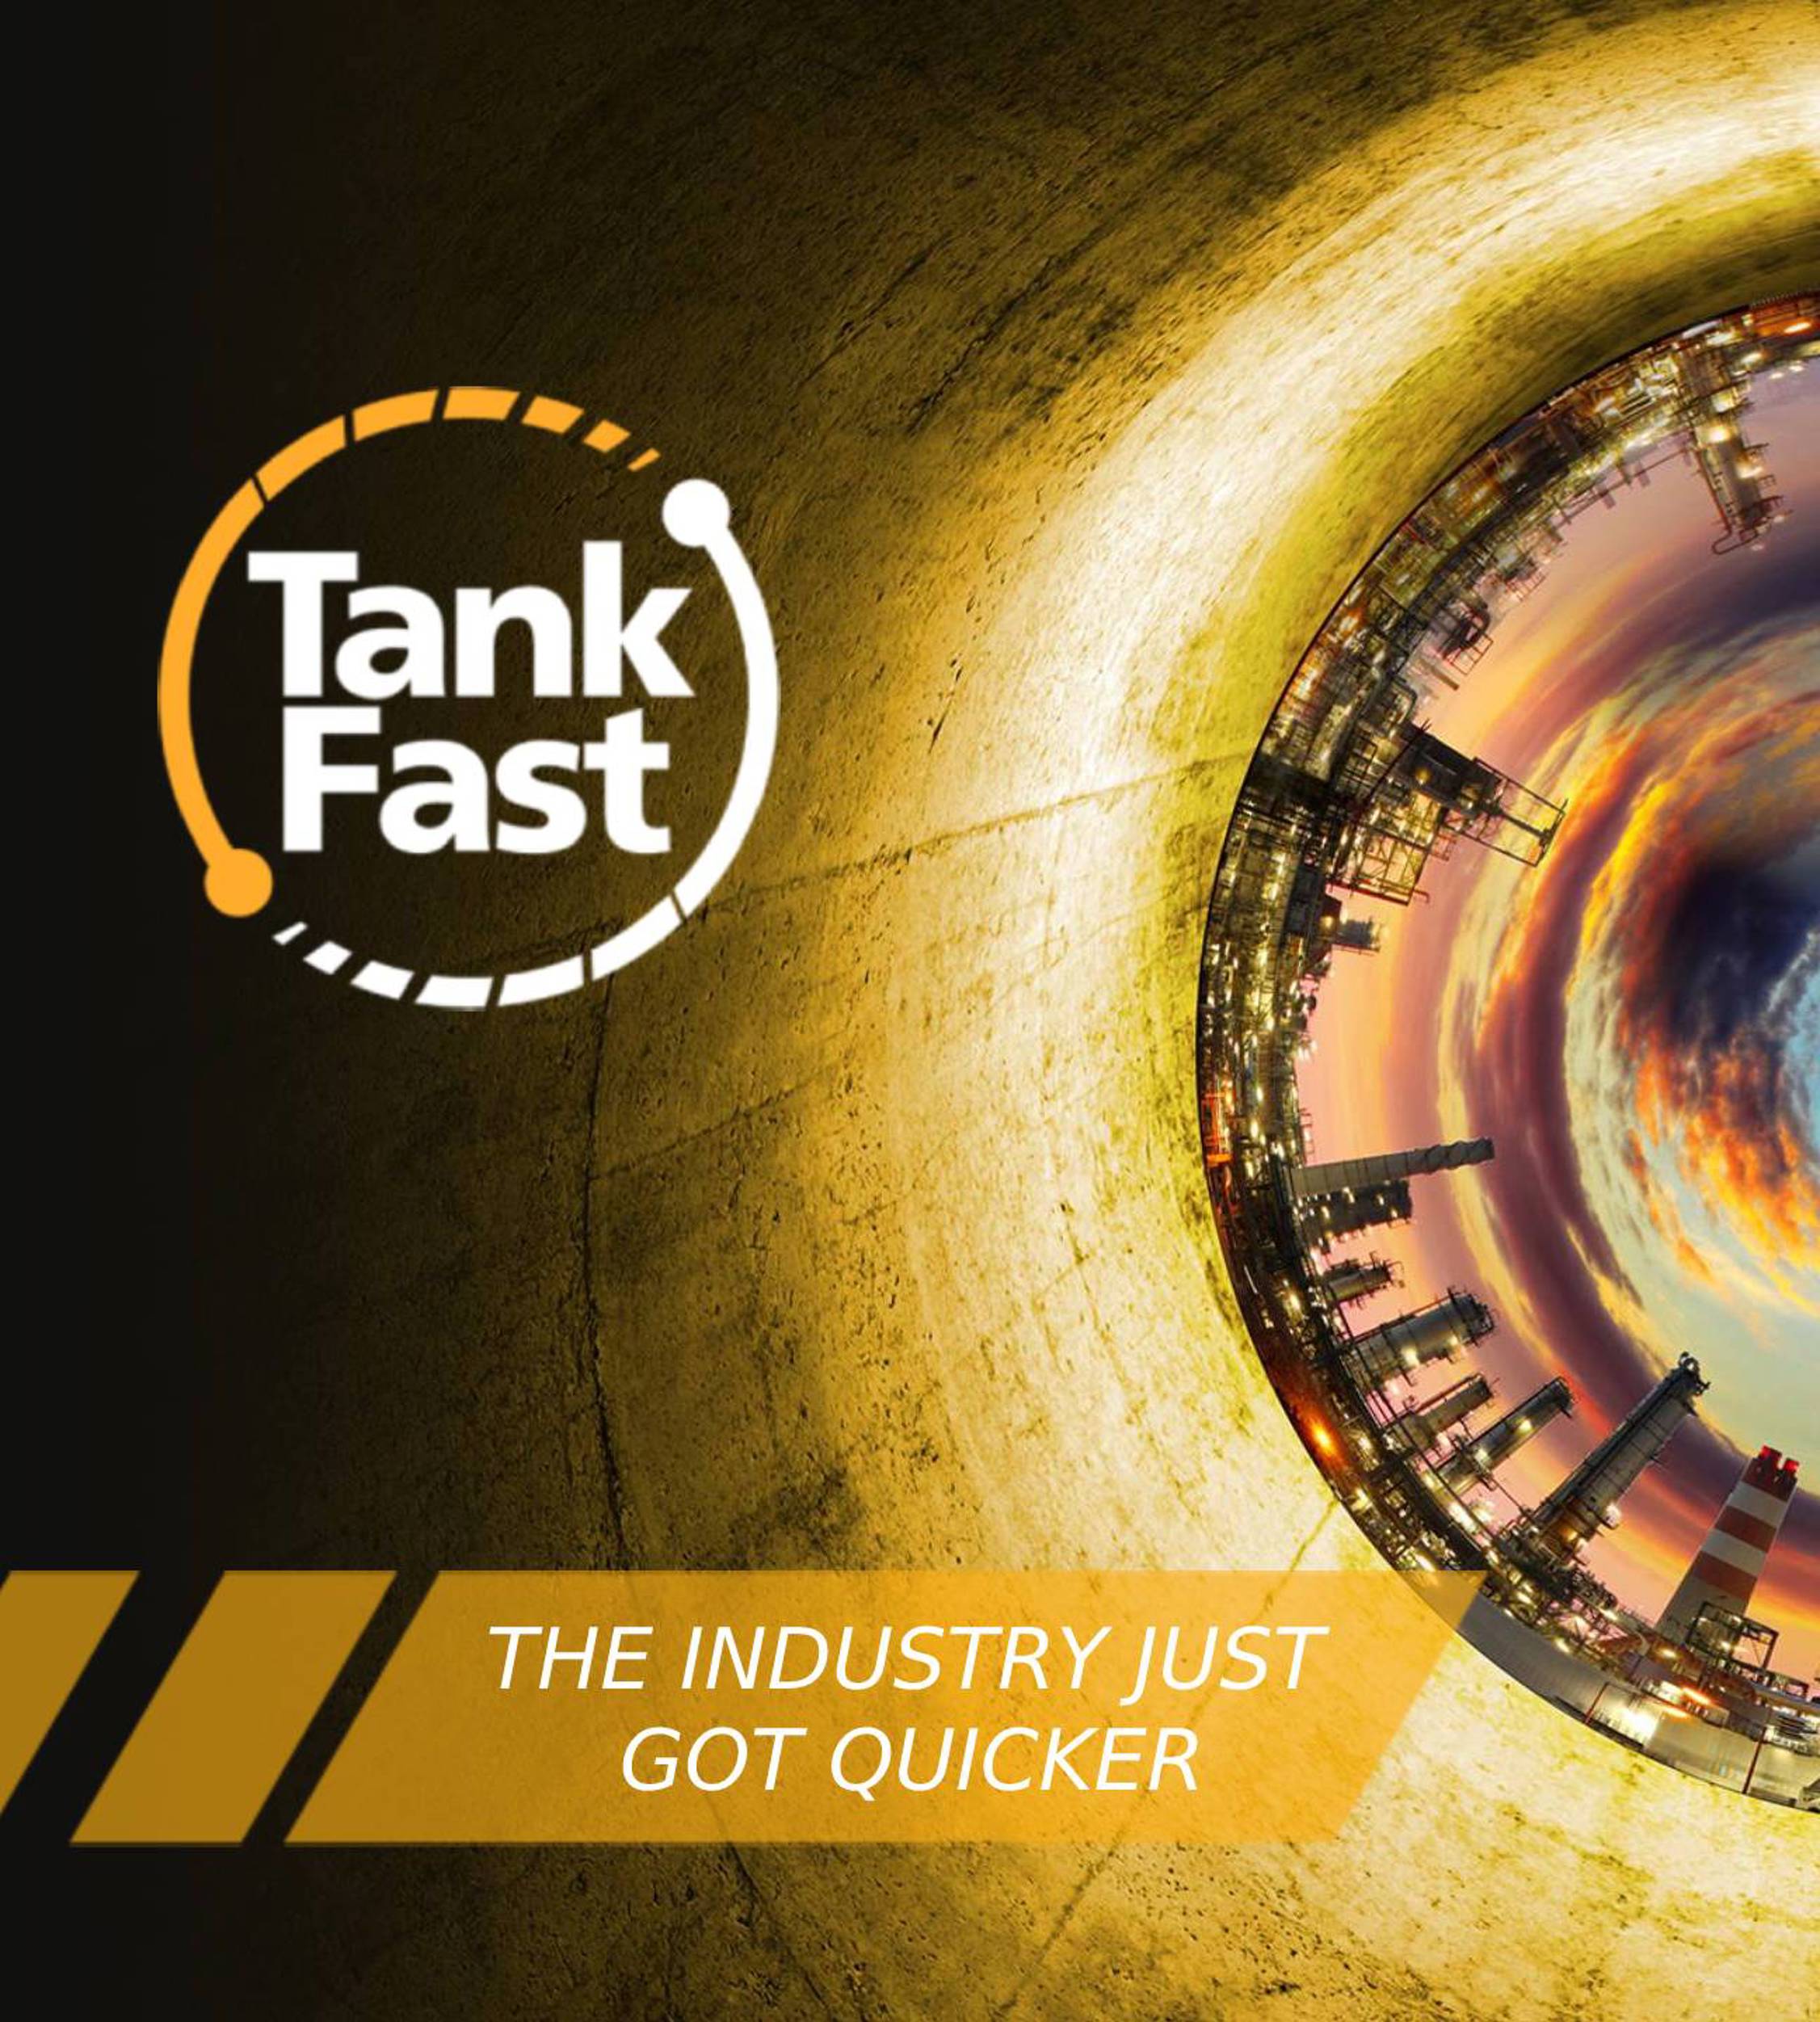 TankFast hero - The industry just got quicker